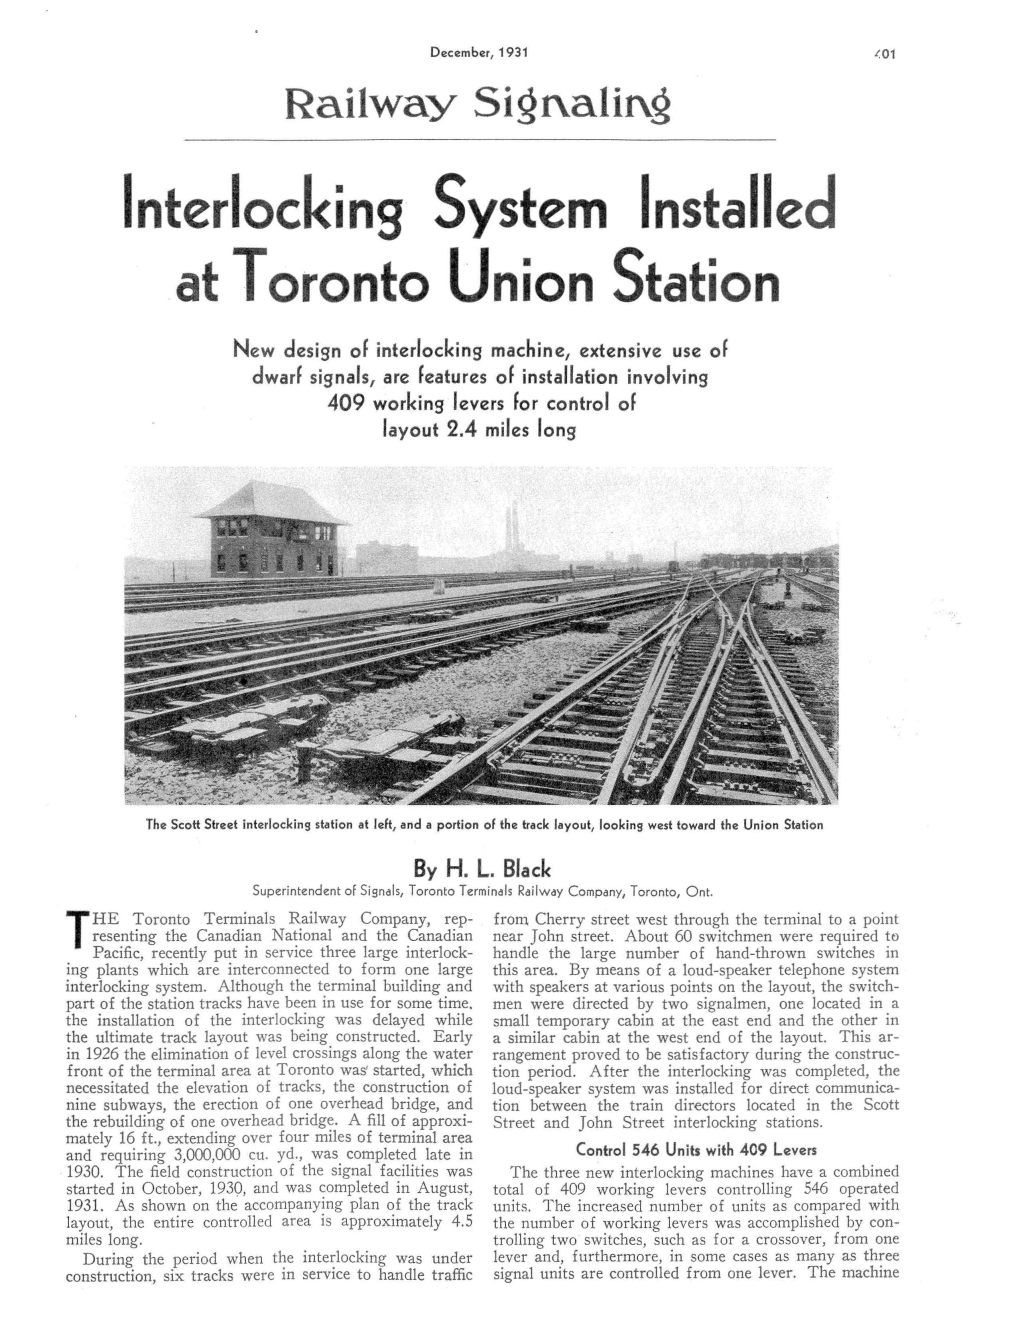 Interlocking System Installed at Toronto Union Station